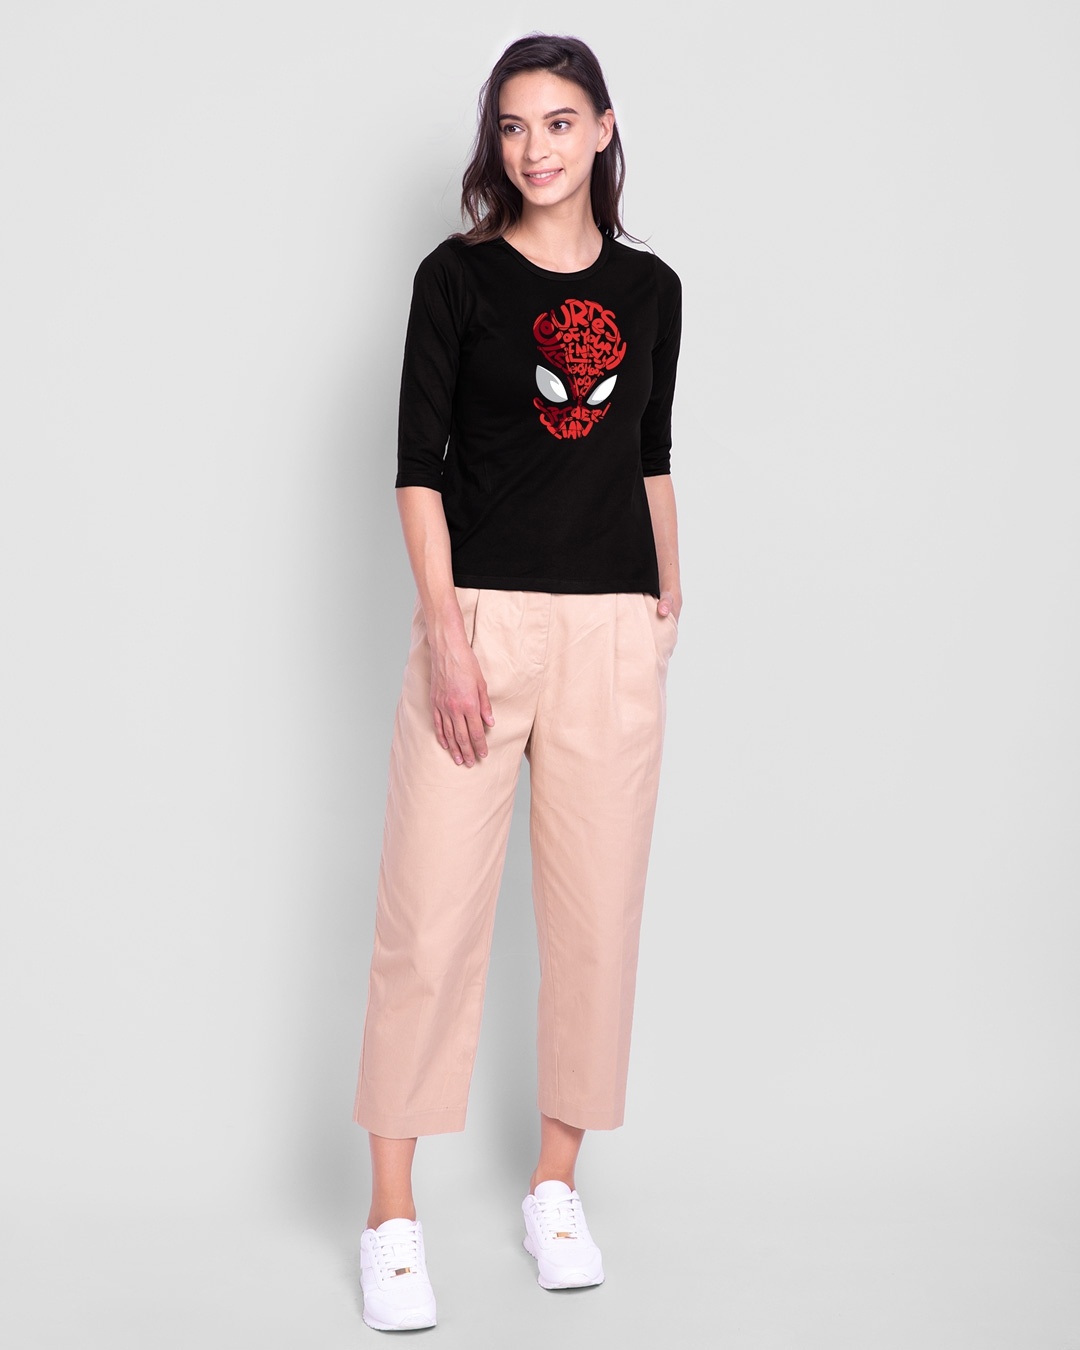 Shop Spiderman Face Round Neck 3/4th Sleeve T-Shirt (AVL) Black-Design